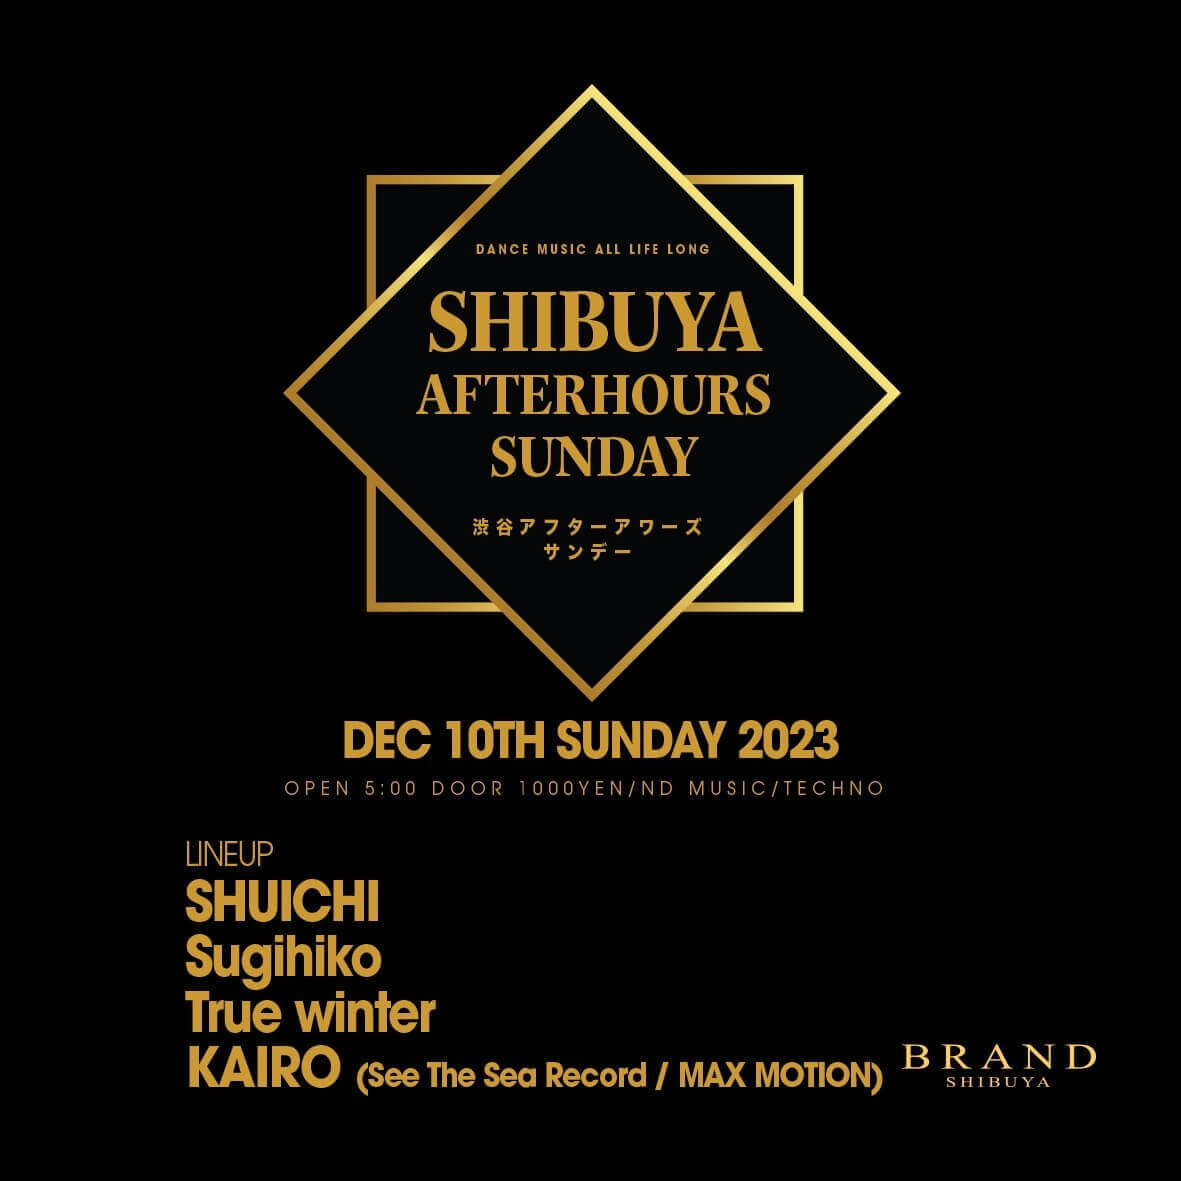 SHIBUYA AFTERHOURS SUNDAY 2023年12月10日（日曜日）に渋谷 クラブのBRAND SHIBUYAで開催されるTECHNOイベント